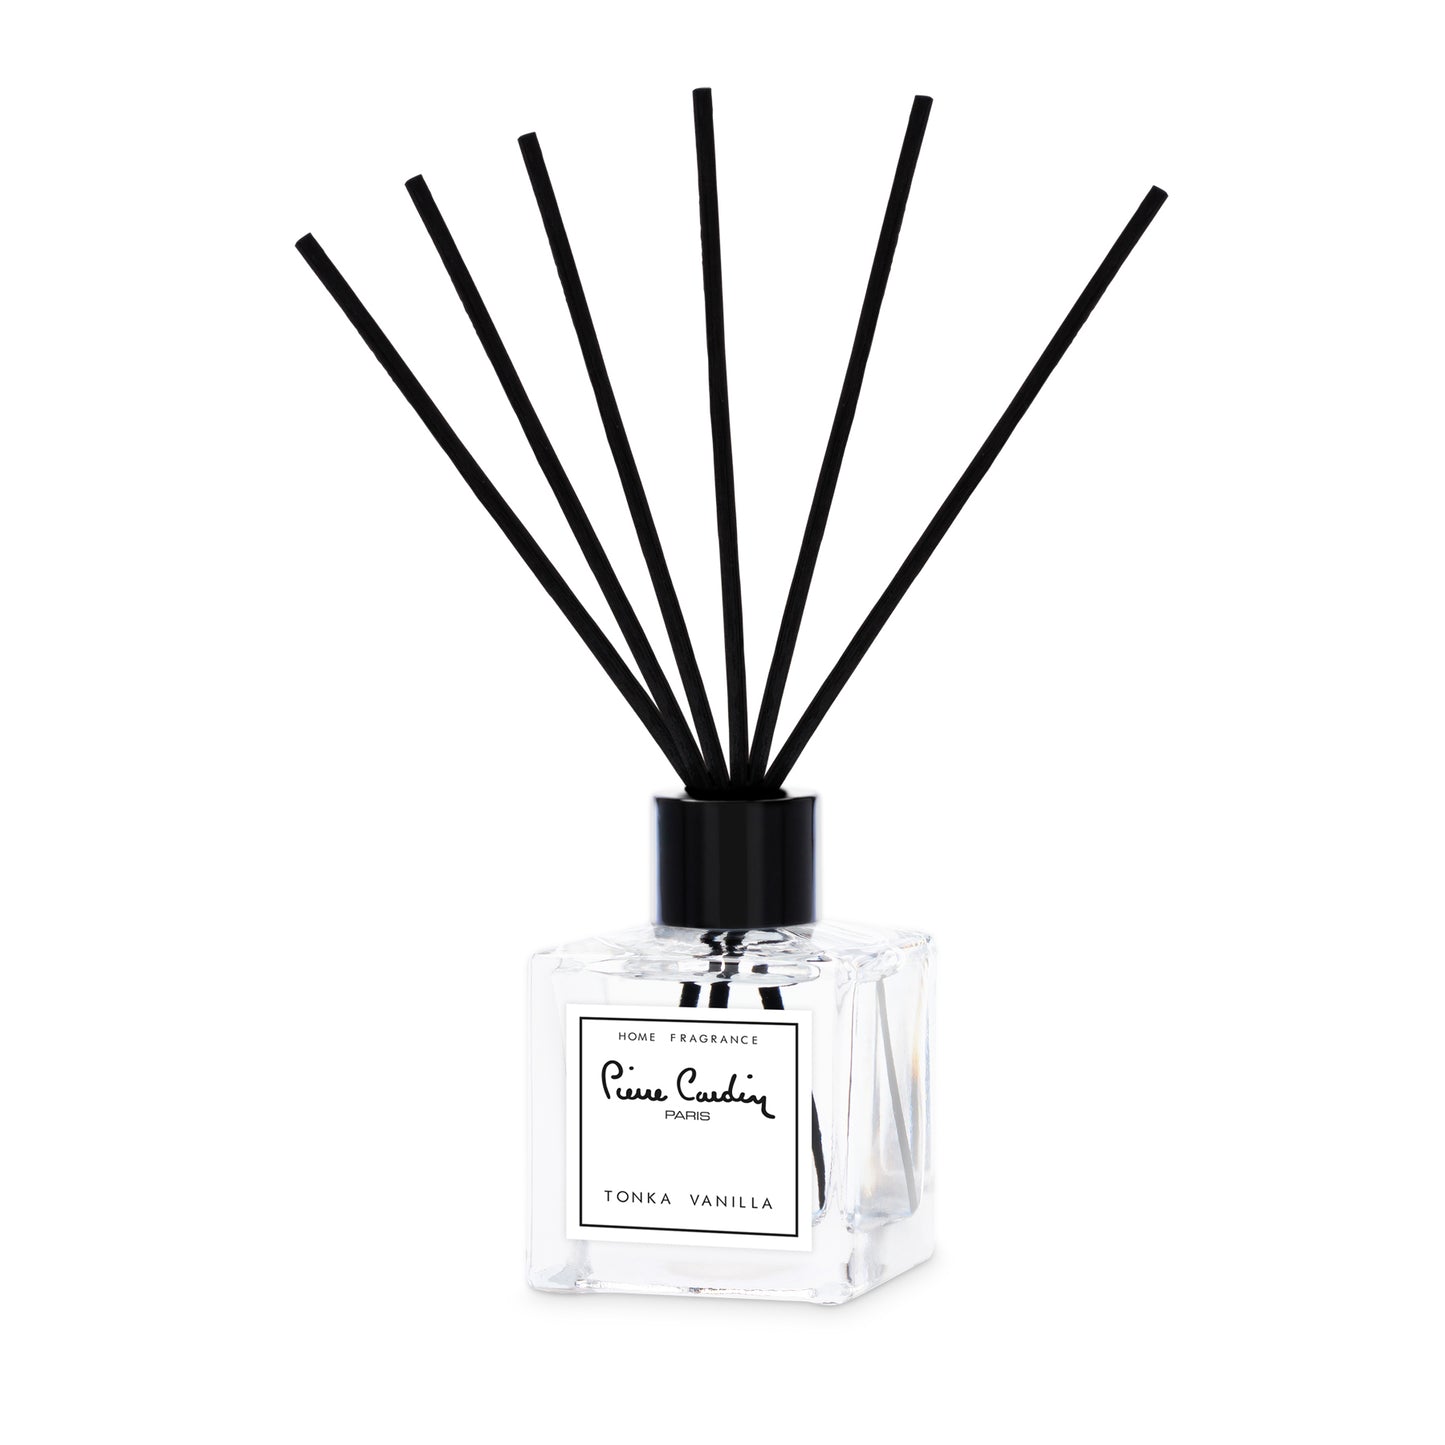 Pierre Cardin Home Fragrance  - TONKA&VANILLA  100 ml